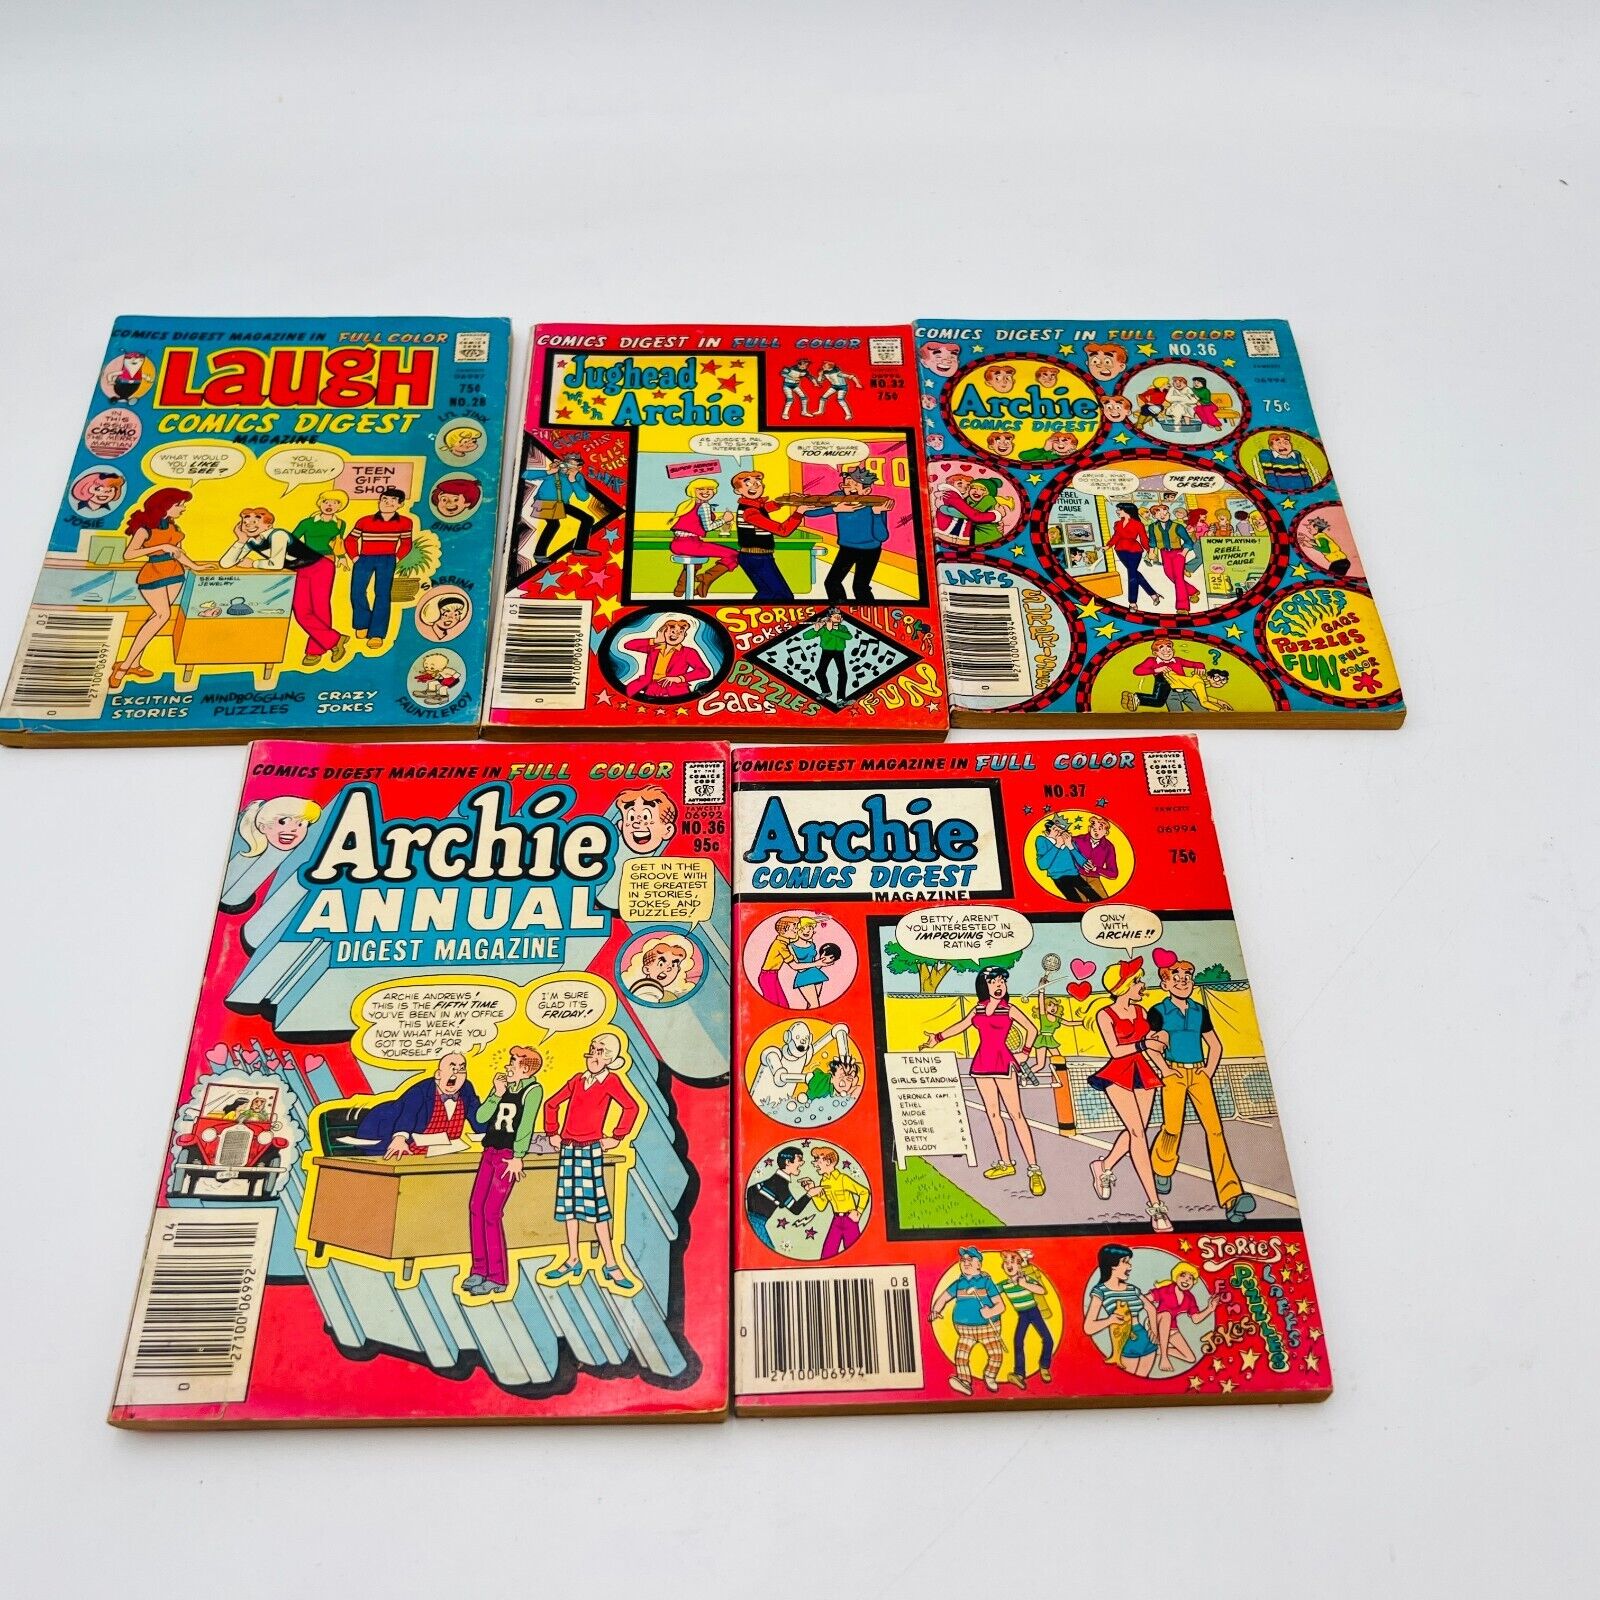 Vintage Lot of 5 Archie, Jughead, and Laugh Comics Digest Magazines